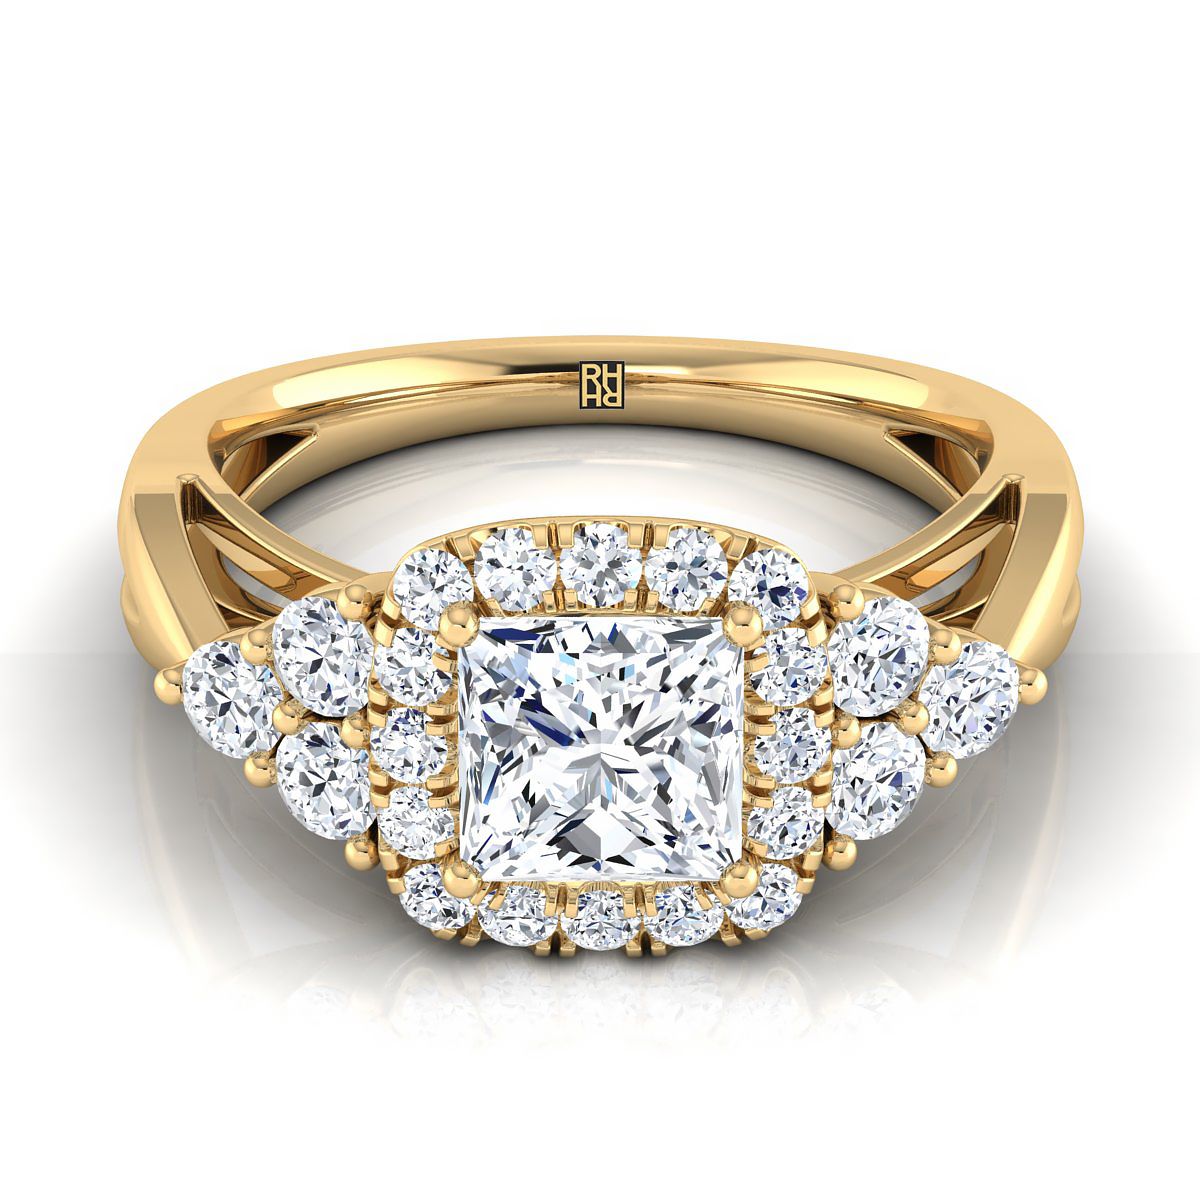 18K Yellow Gold Princess Cut Open Twisted Triple Diamond Engagement Ring -5/8ctw